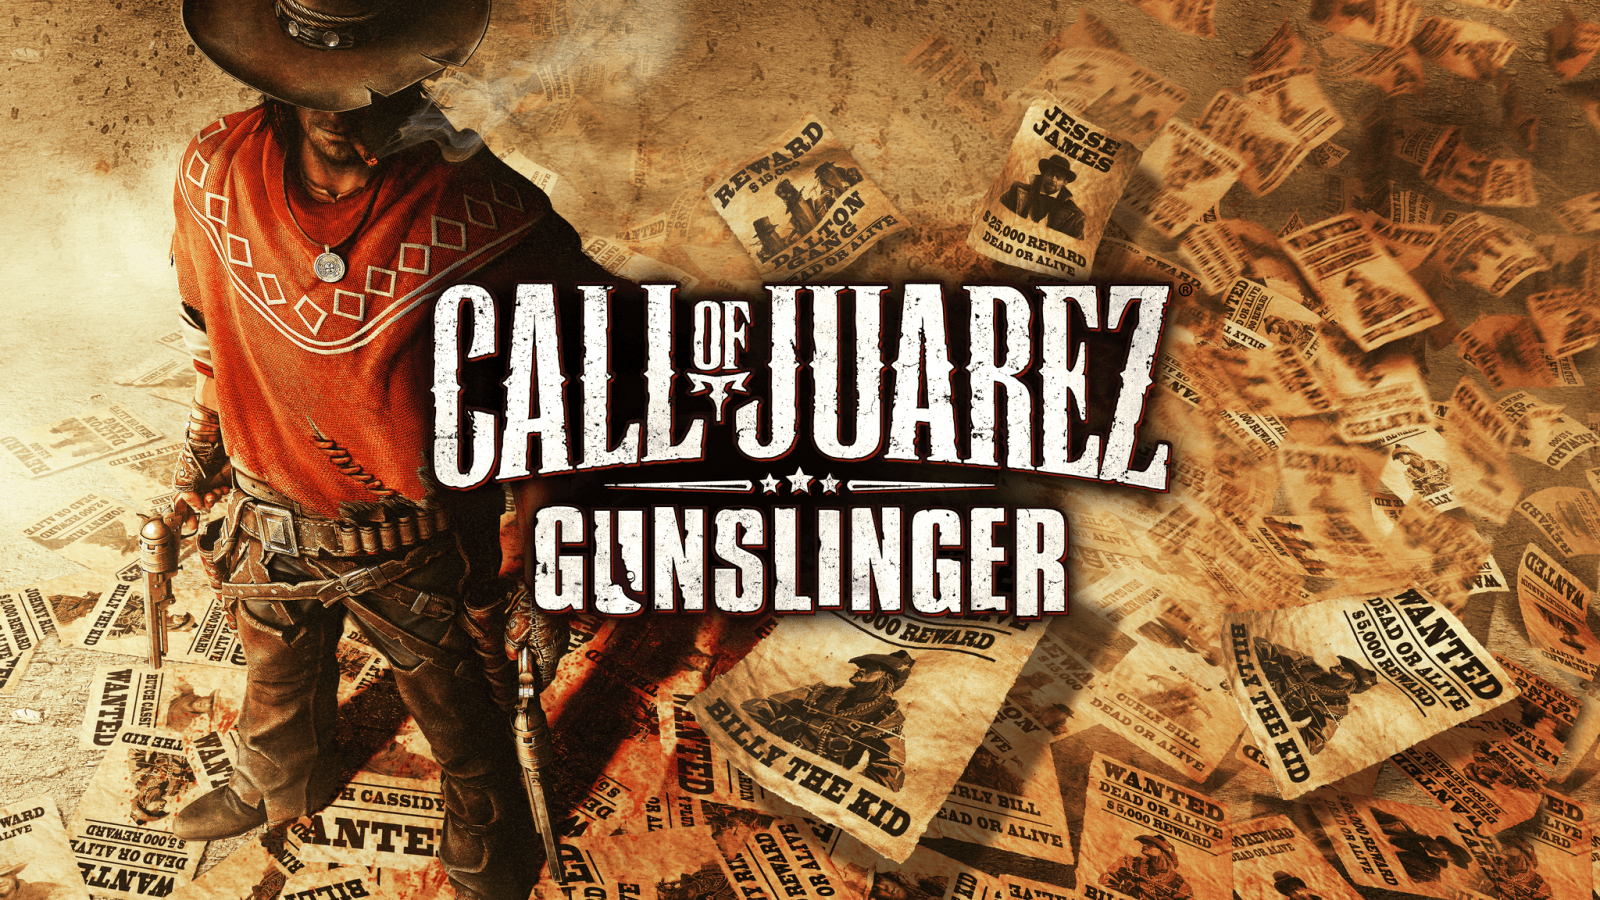 Call of juarez gunslinger steam is required